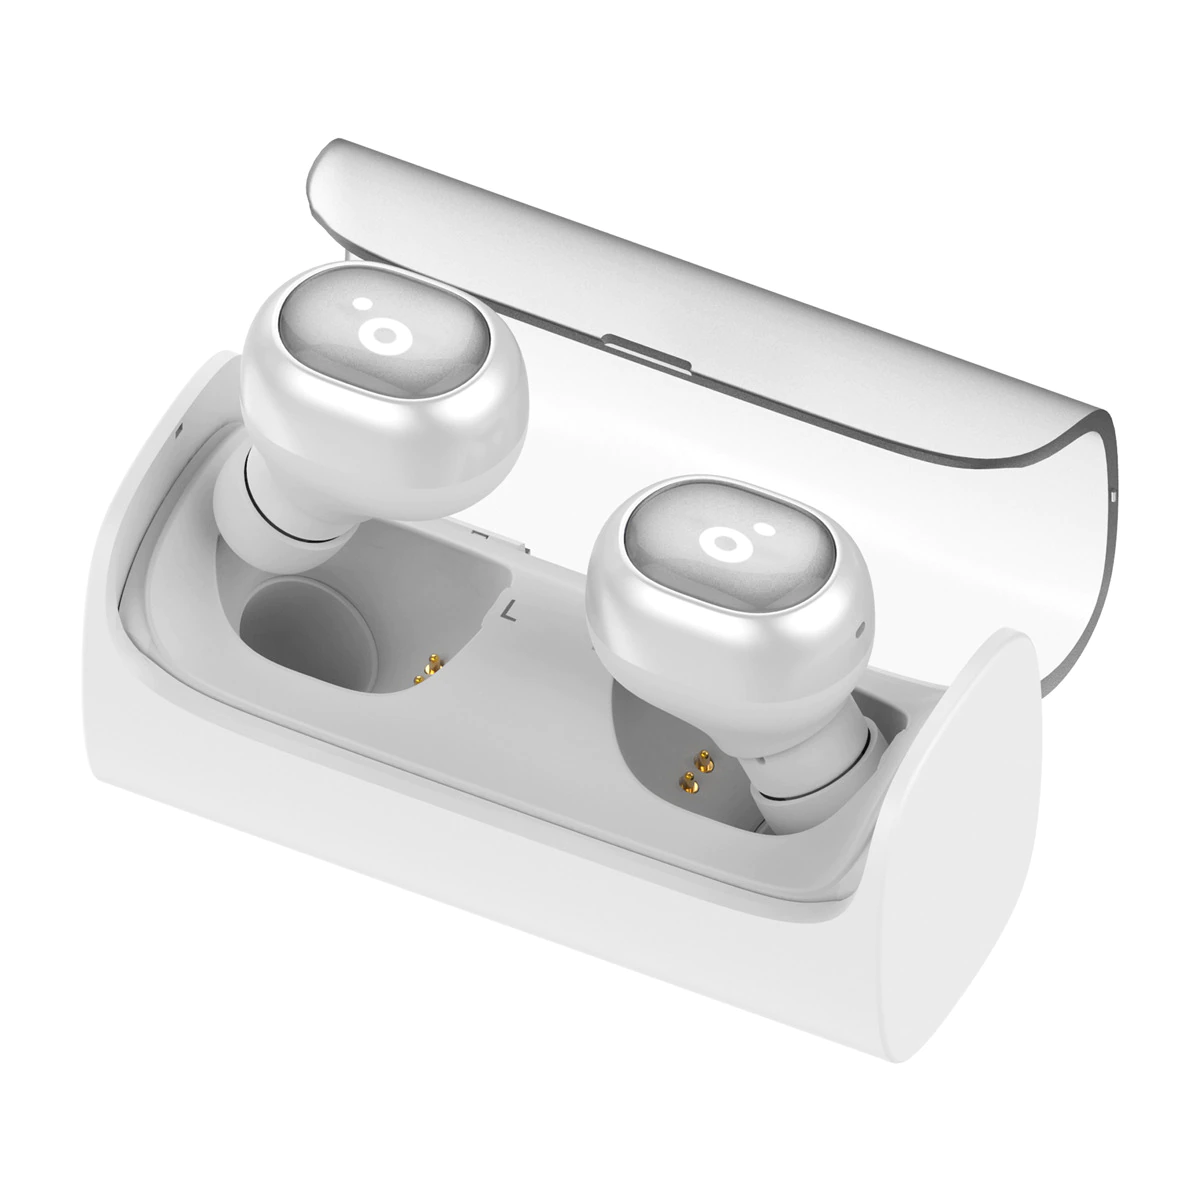 Auriculares de botón Sunstech Wavepods Blanco True Bluetooth V5.0 con micrófono